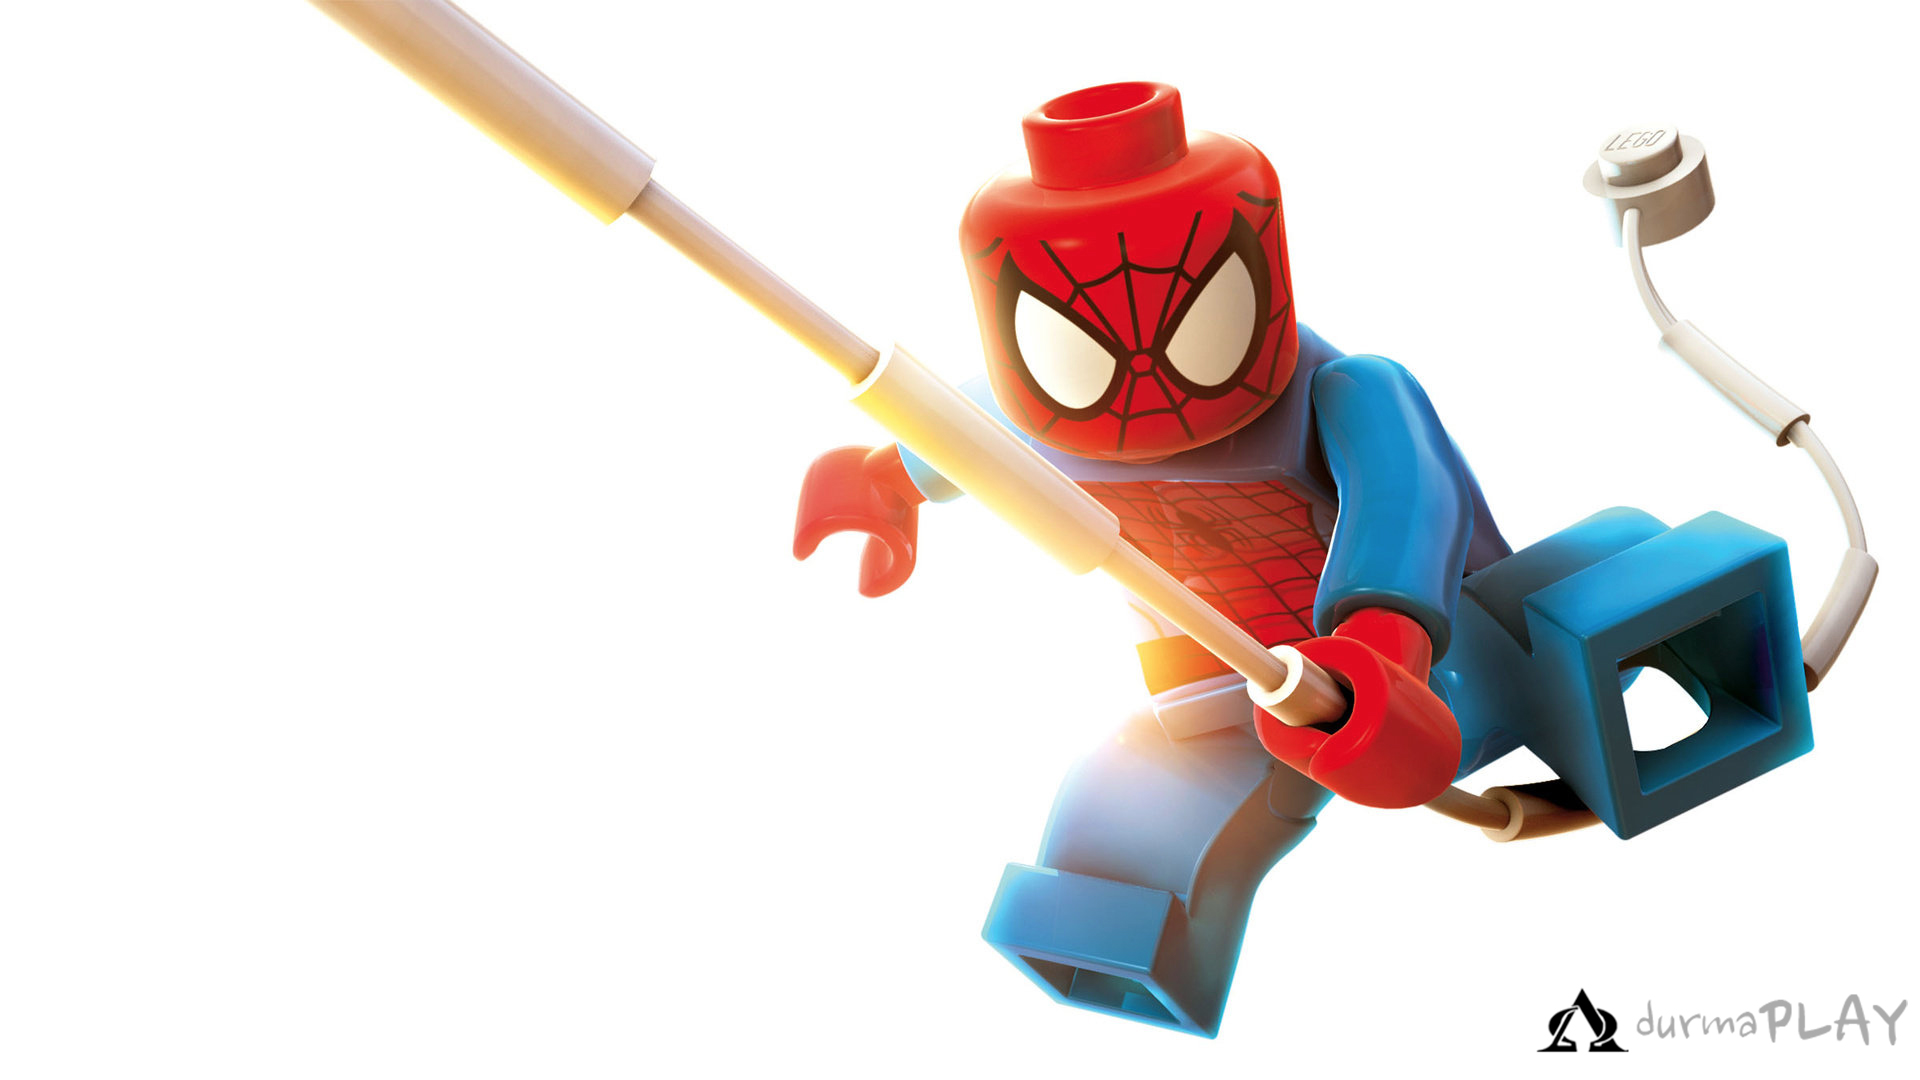 Lego Marvel Super Heroes Ps4